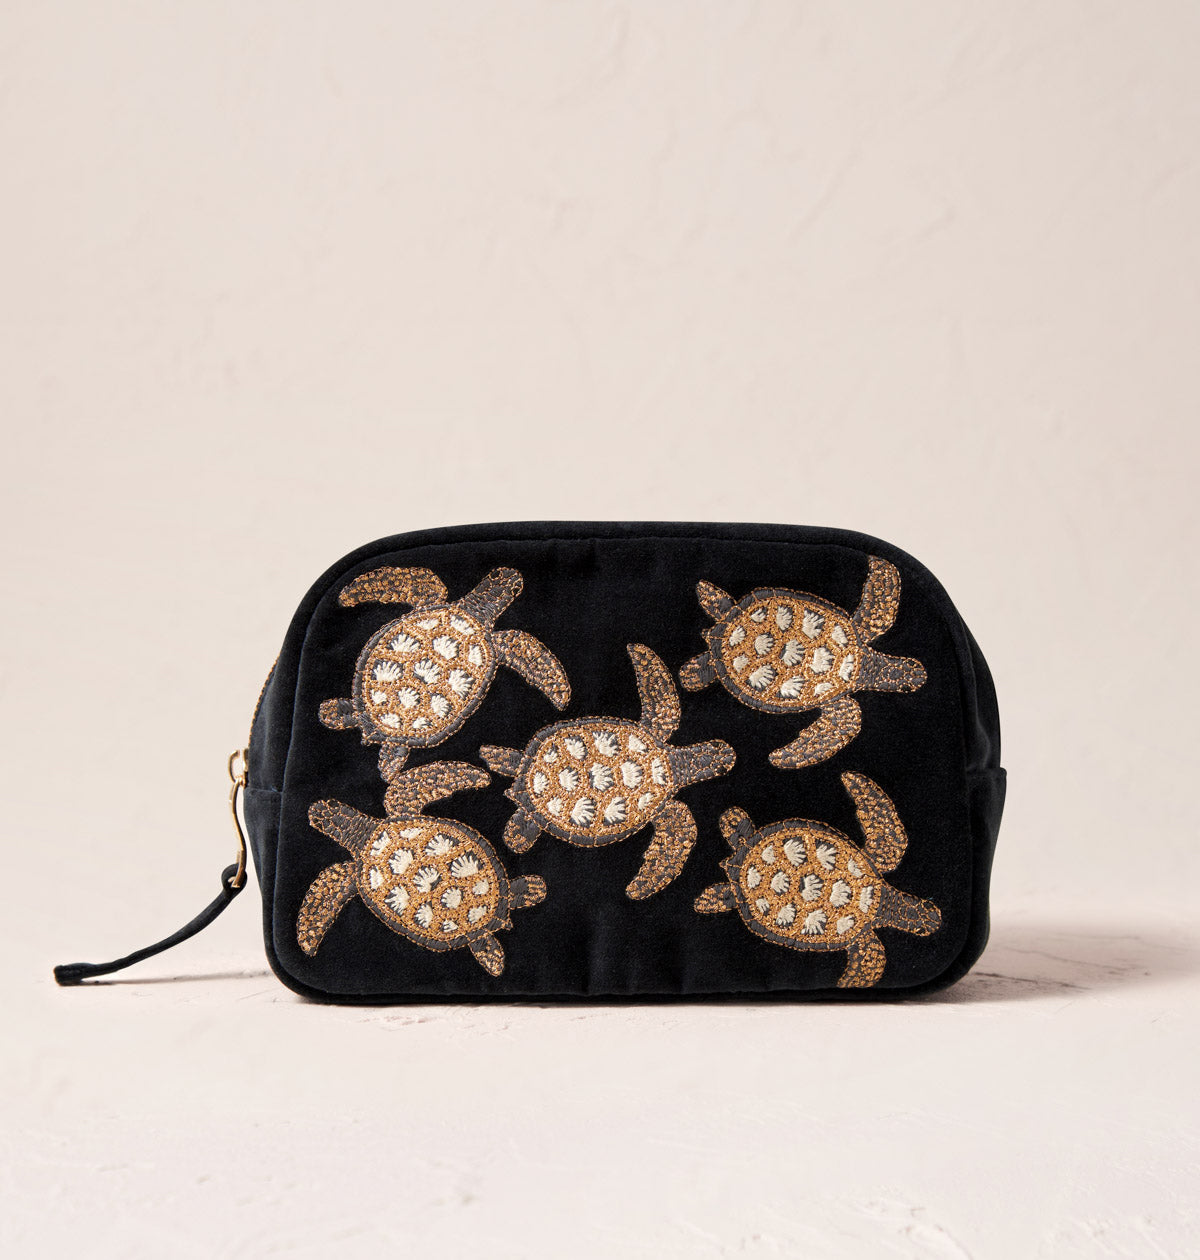 Turtle Conservation Cosmetics Bag